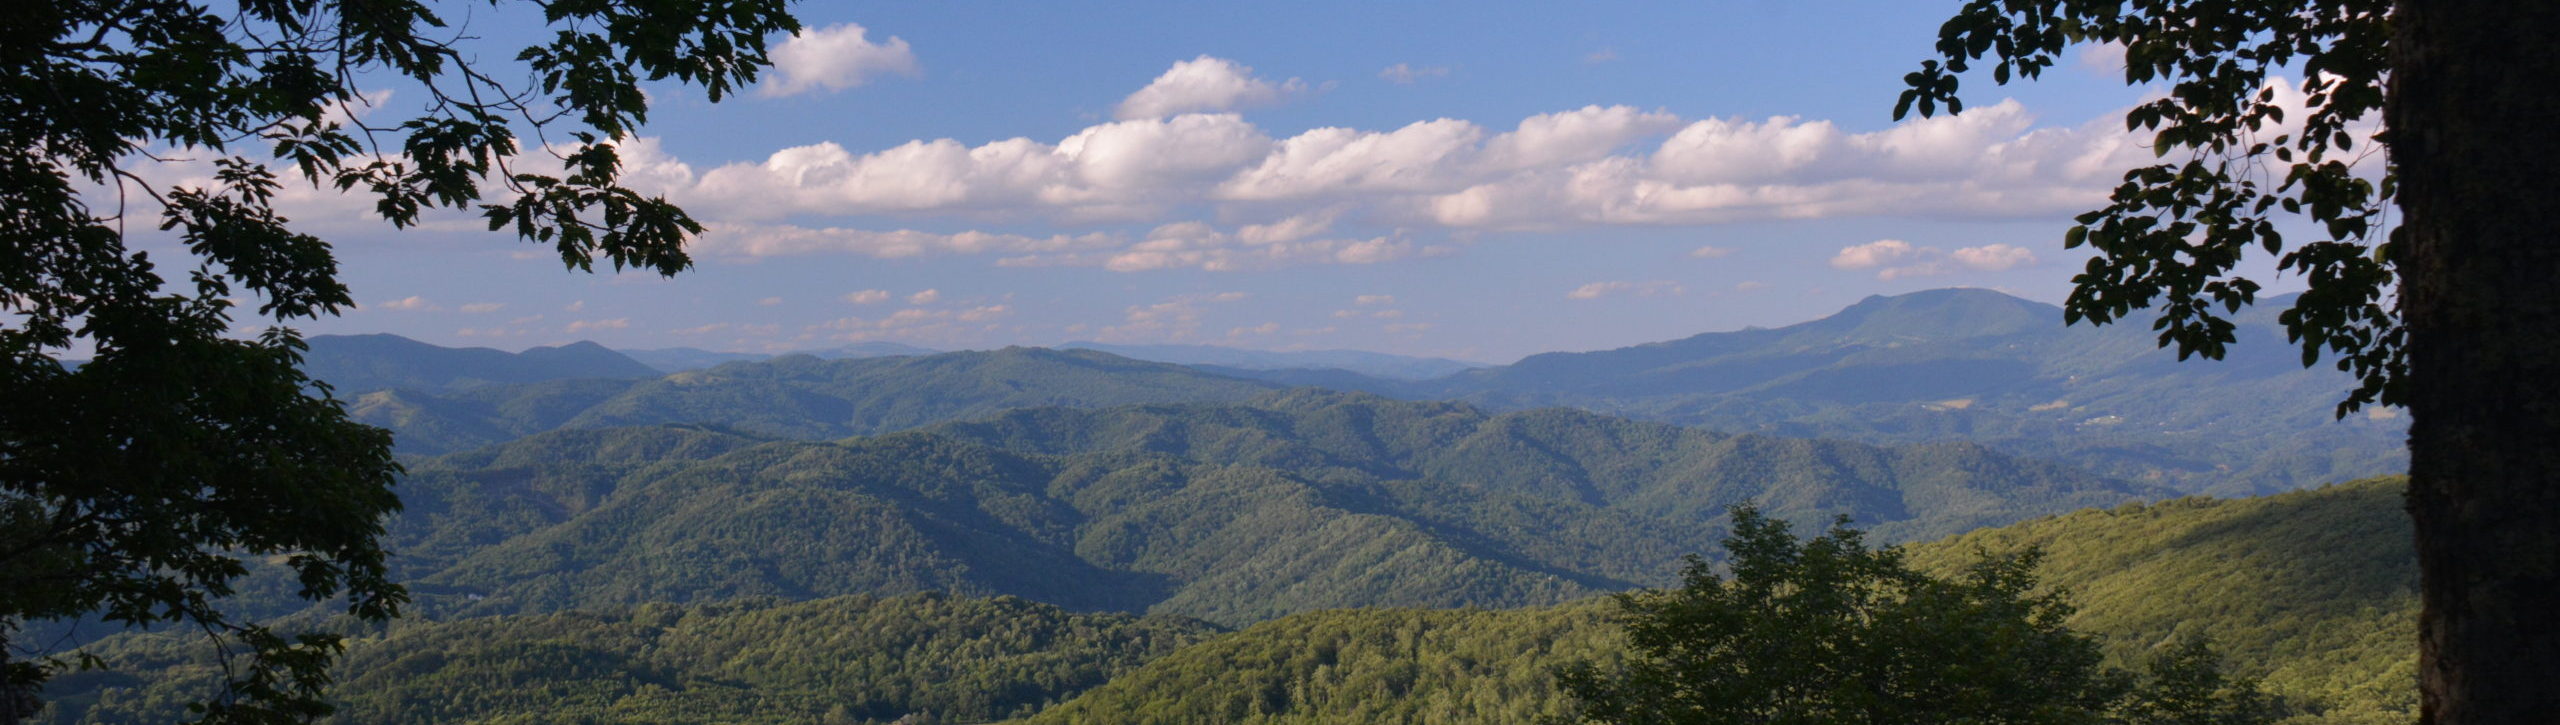 Appalachian Mountain Dreams